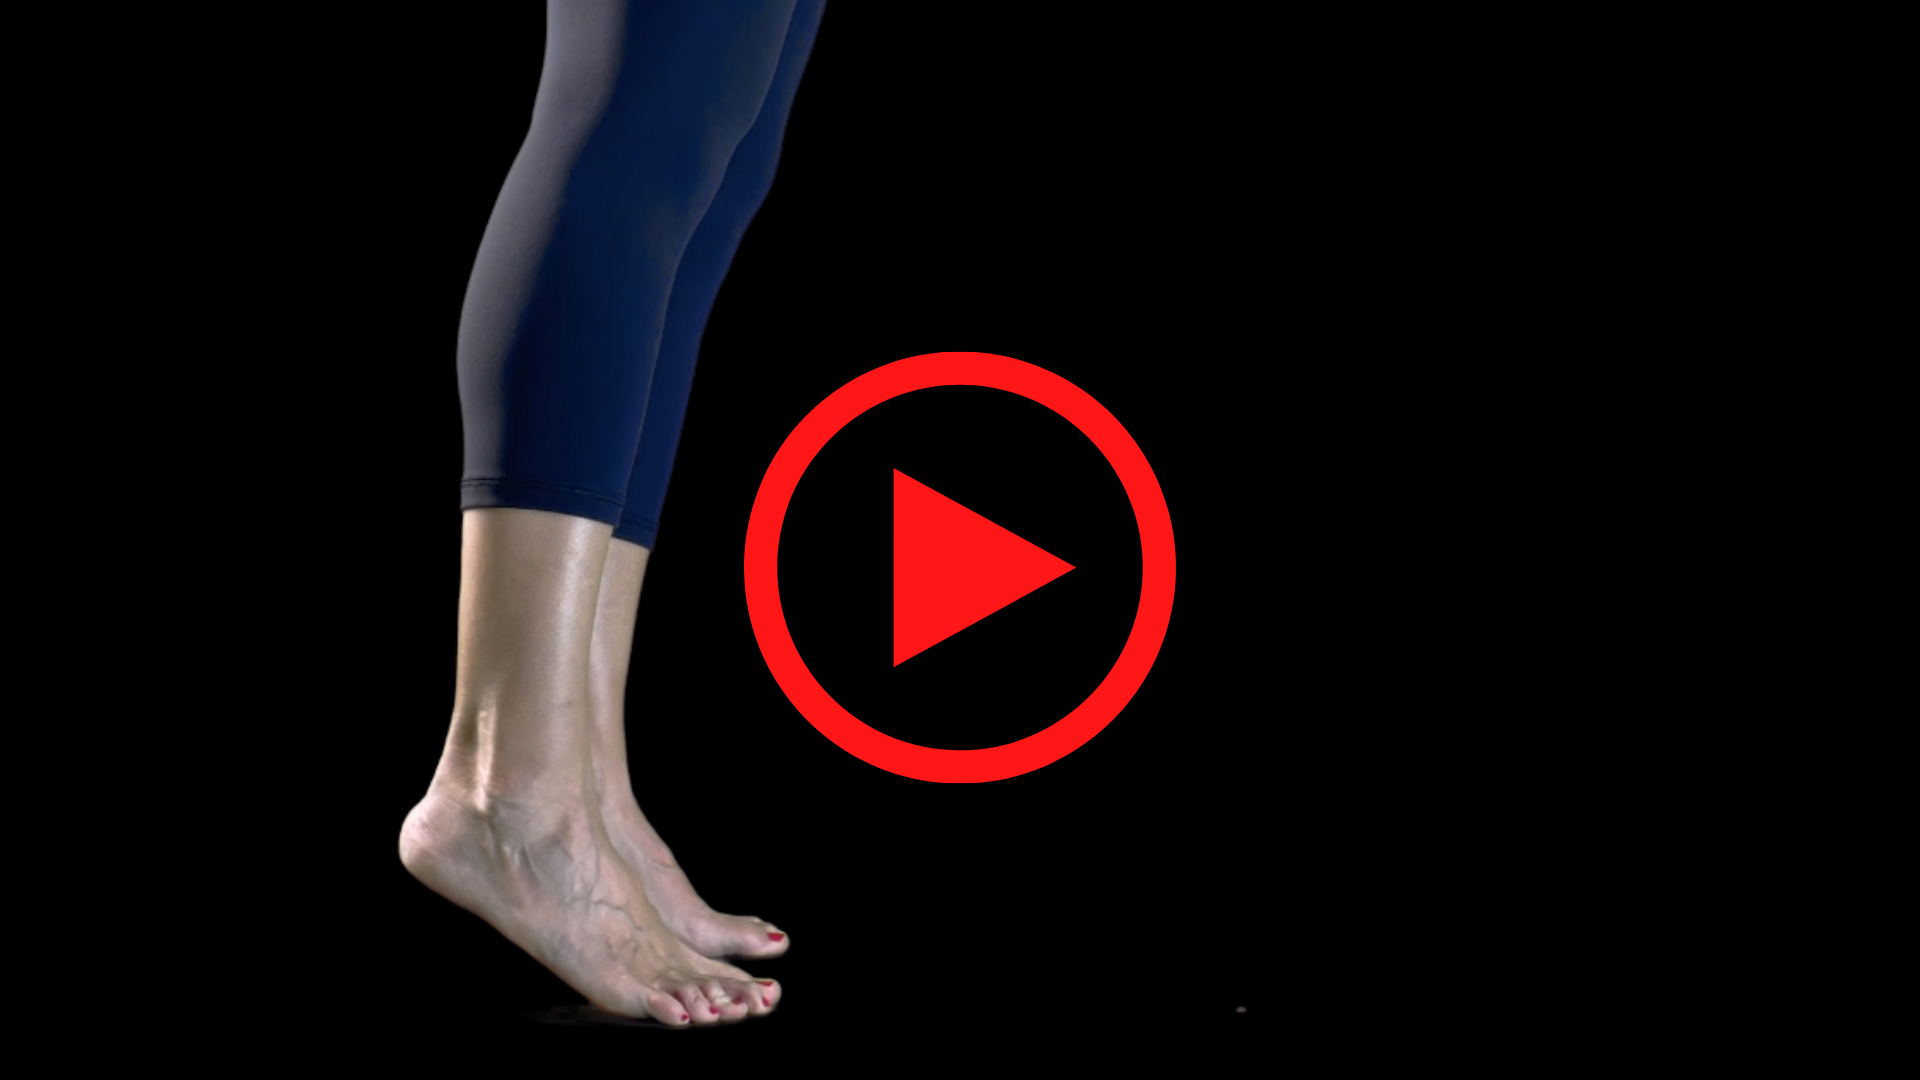 Plantar Heel Pain Workup: Laboratory Studies, Imaging Studies